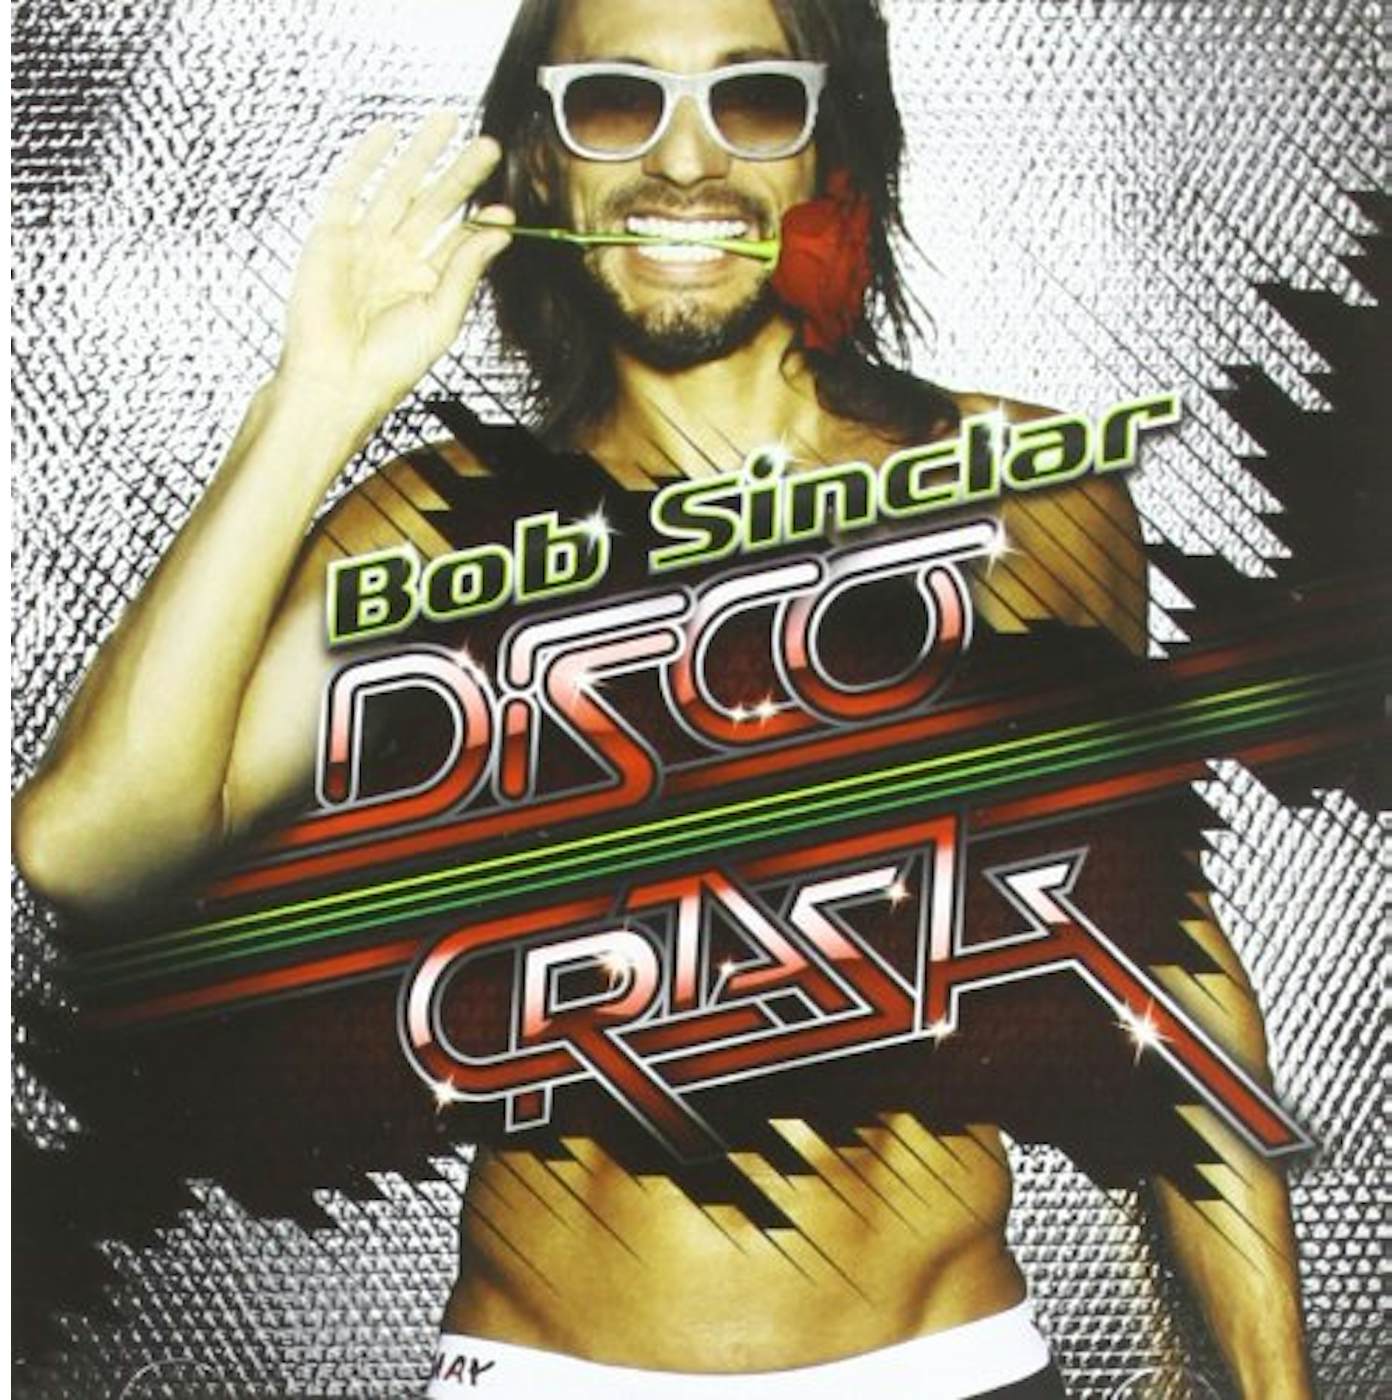 Bob Sinclar DISCO CRASH CD